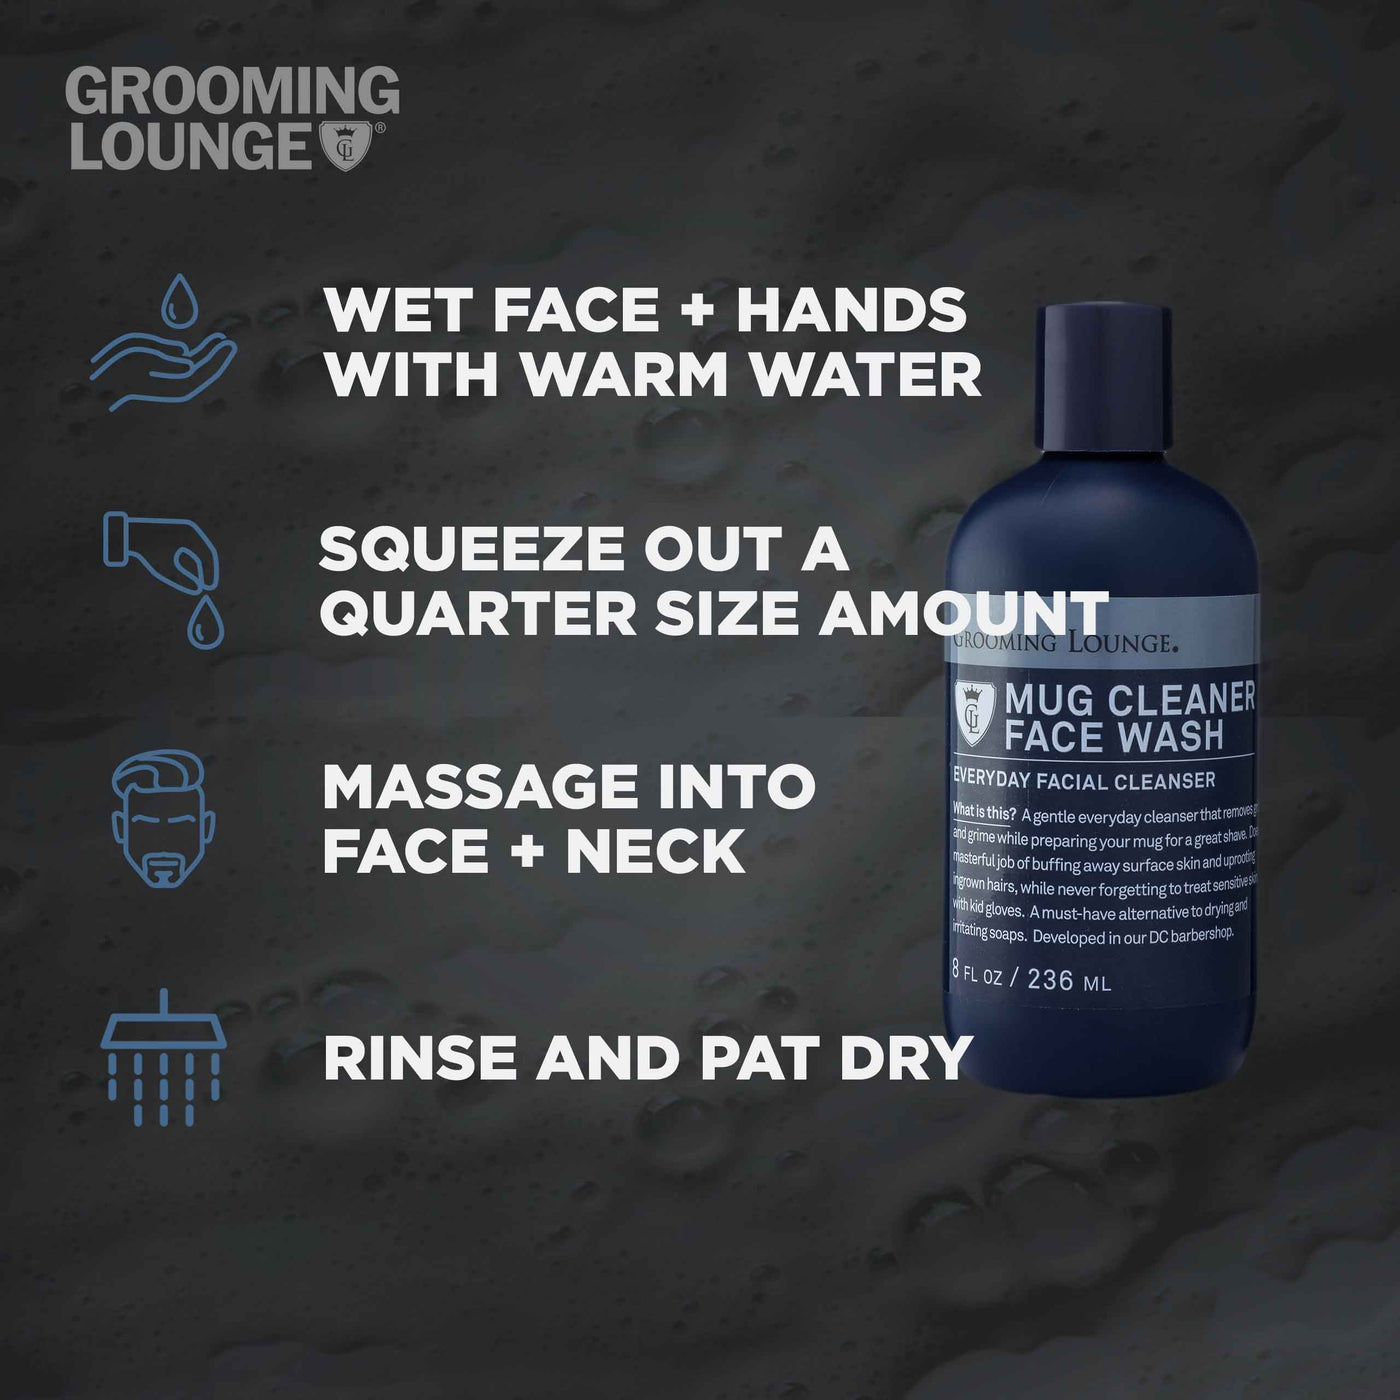 Grooming Lounge Mug Cleaner 2 Pack (Save $6) by Grooming Lounge